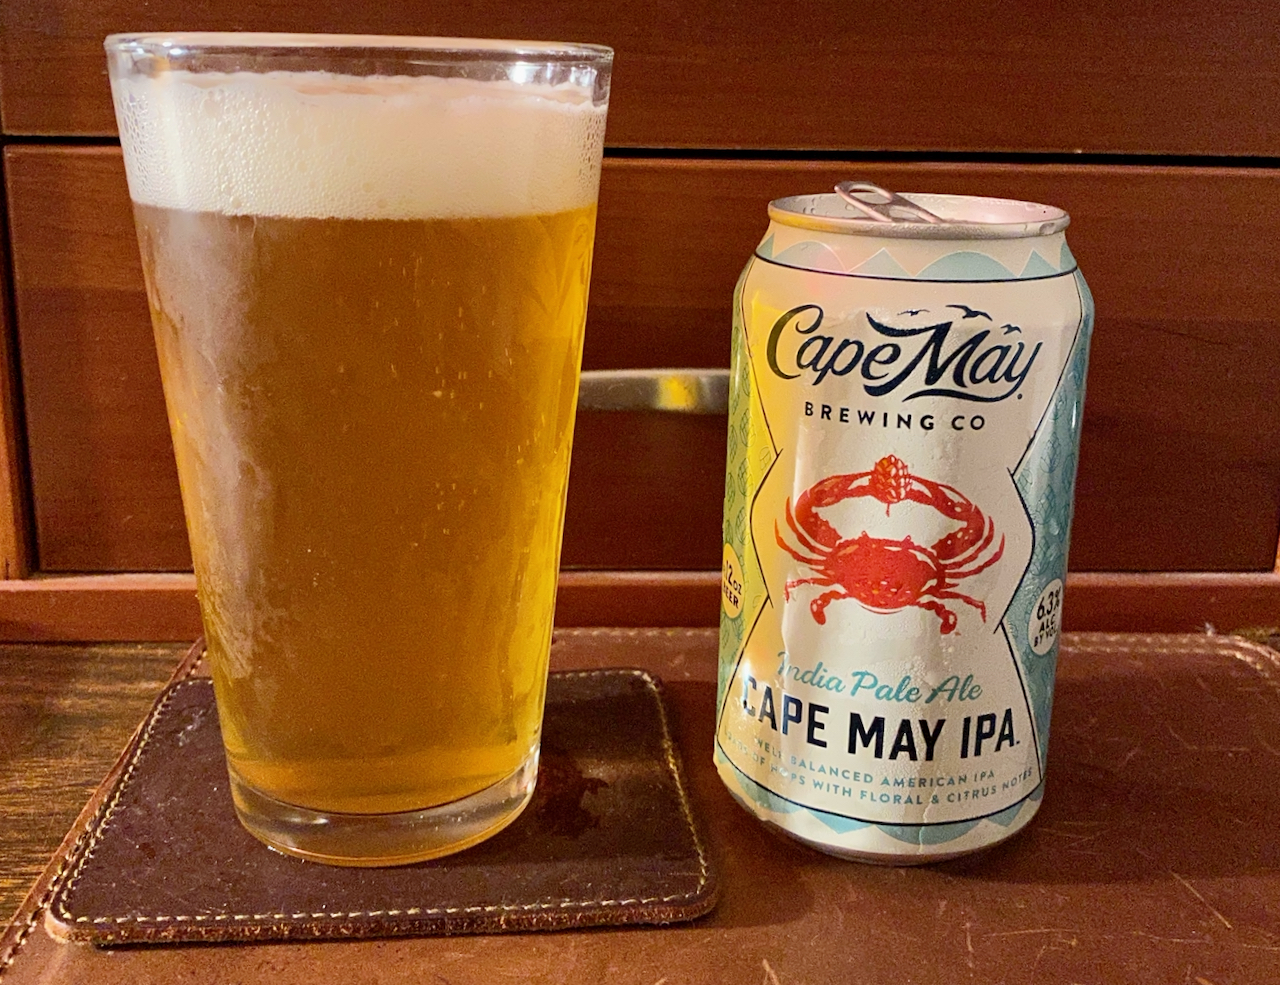 Cape May IPA